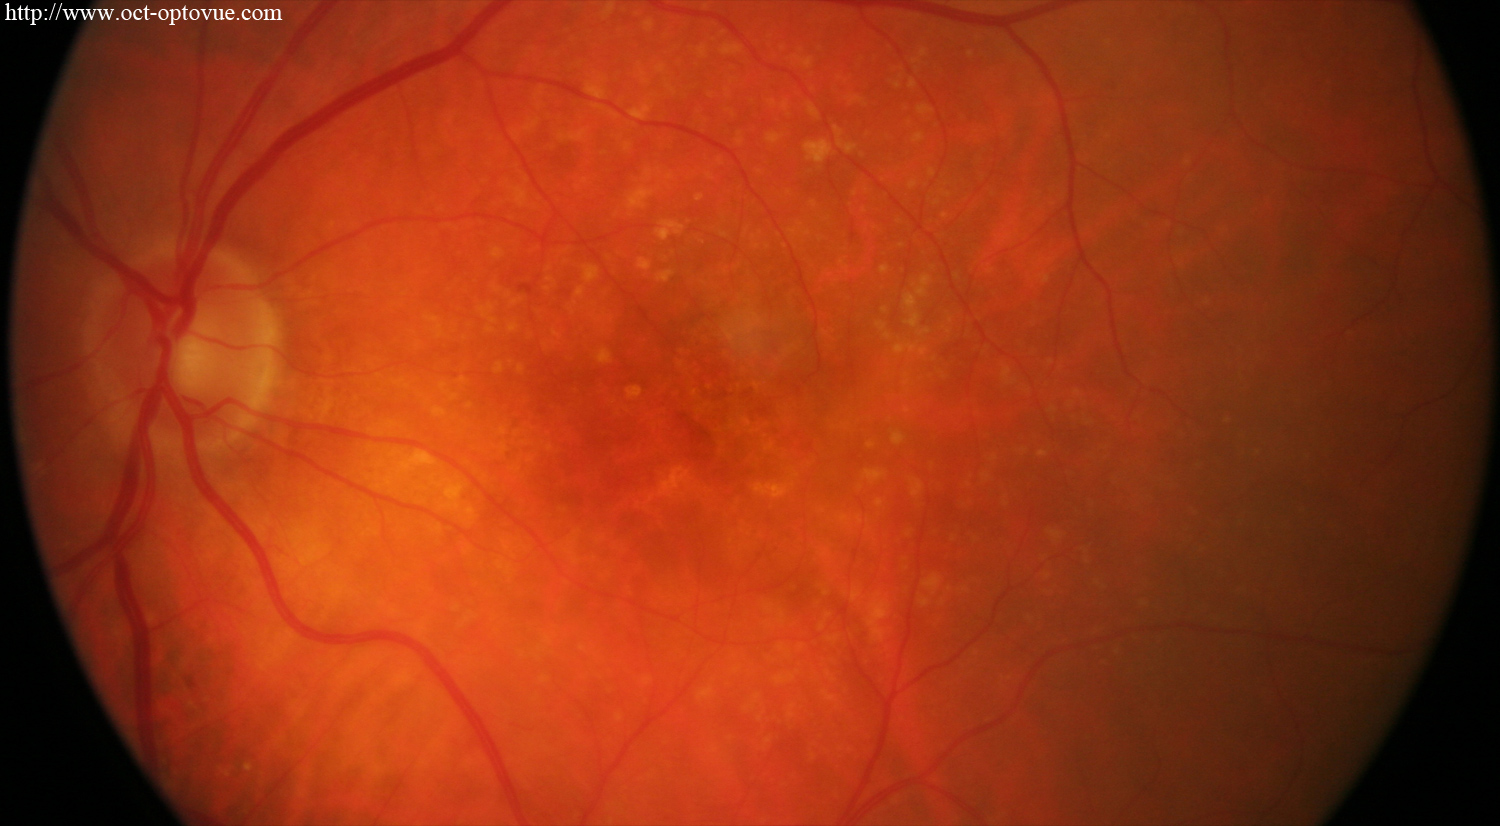 recurrent cnv retina optovue angiovue avanti